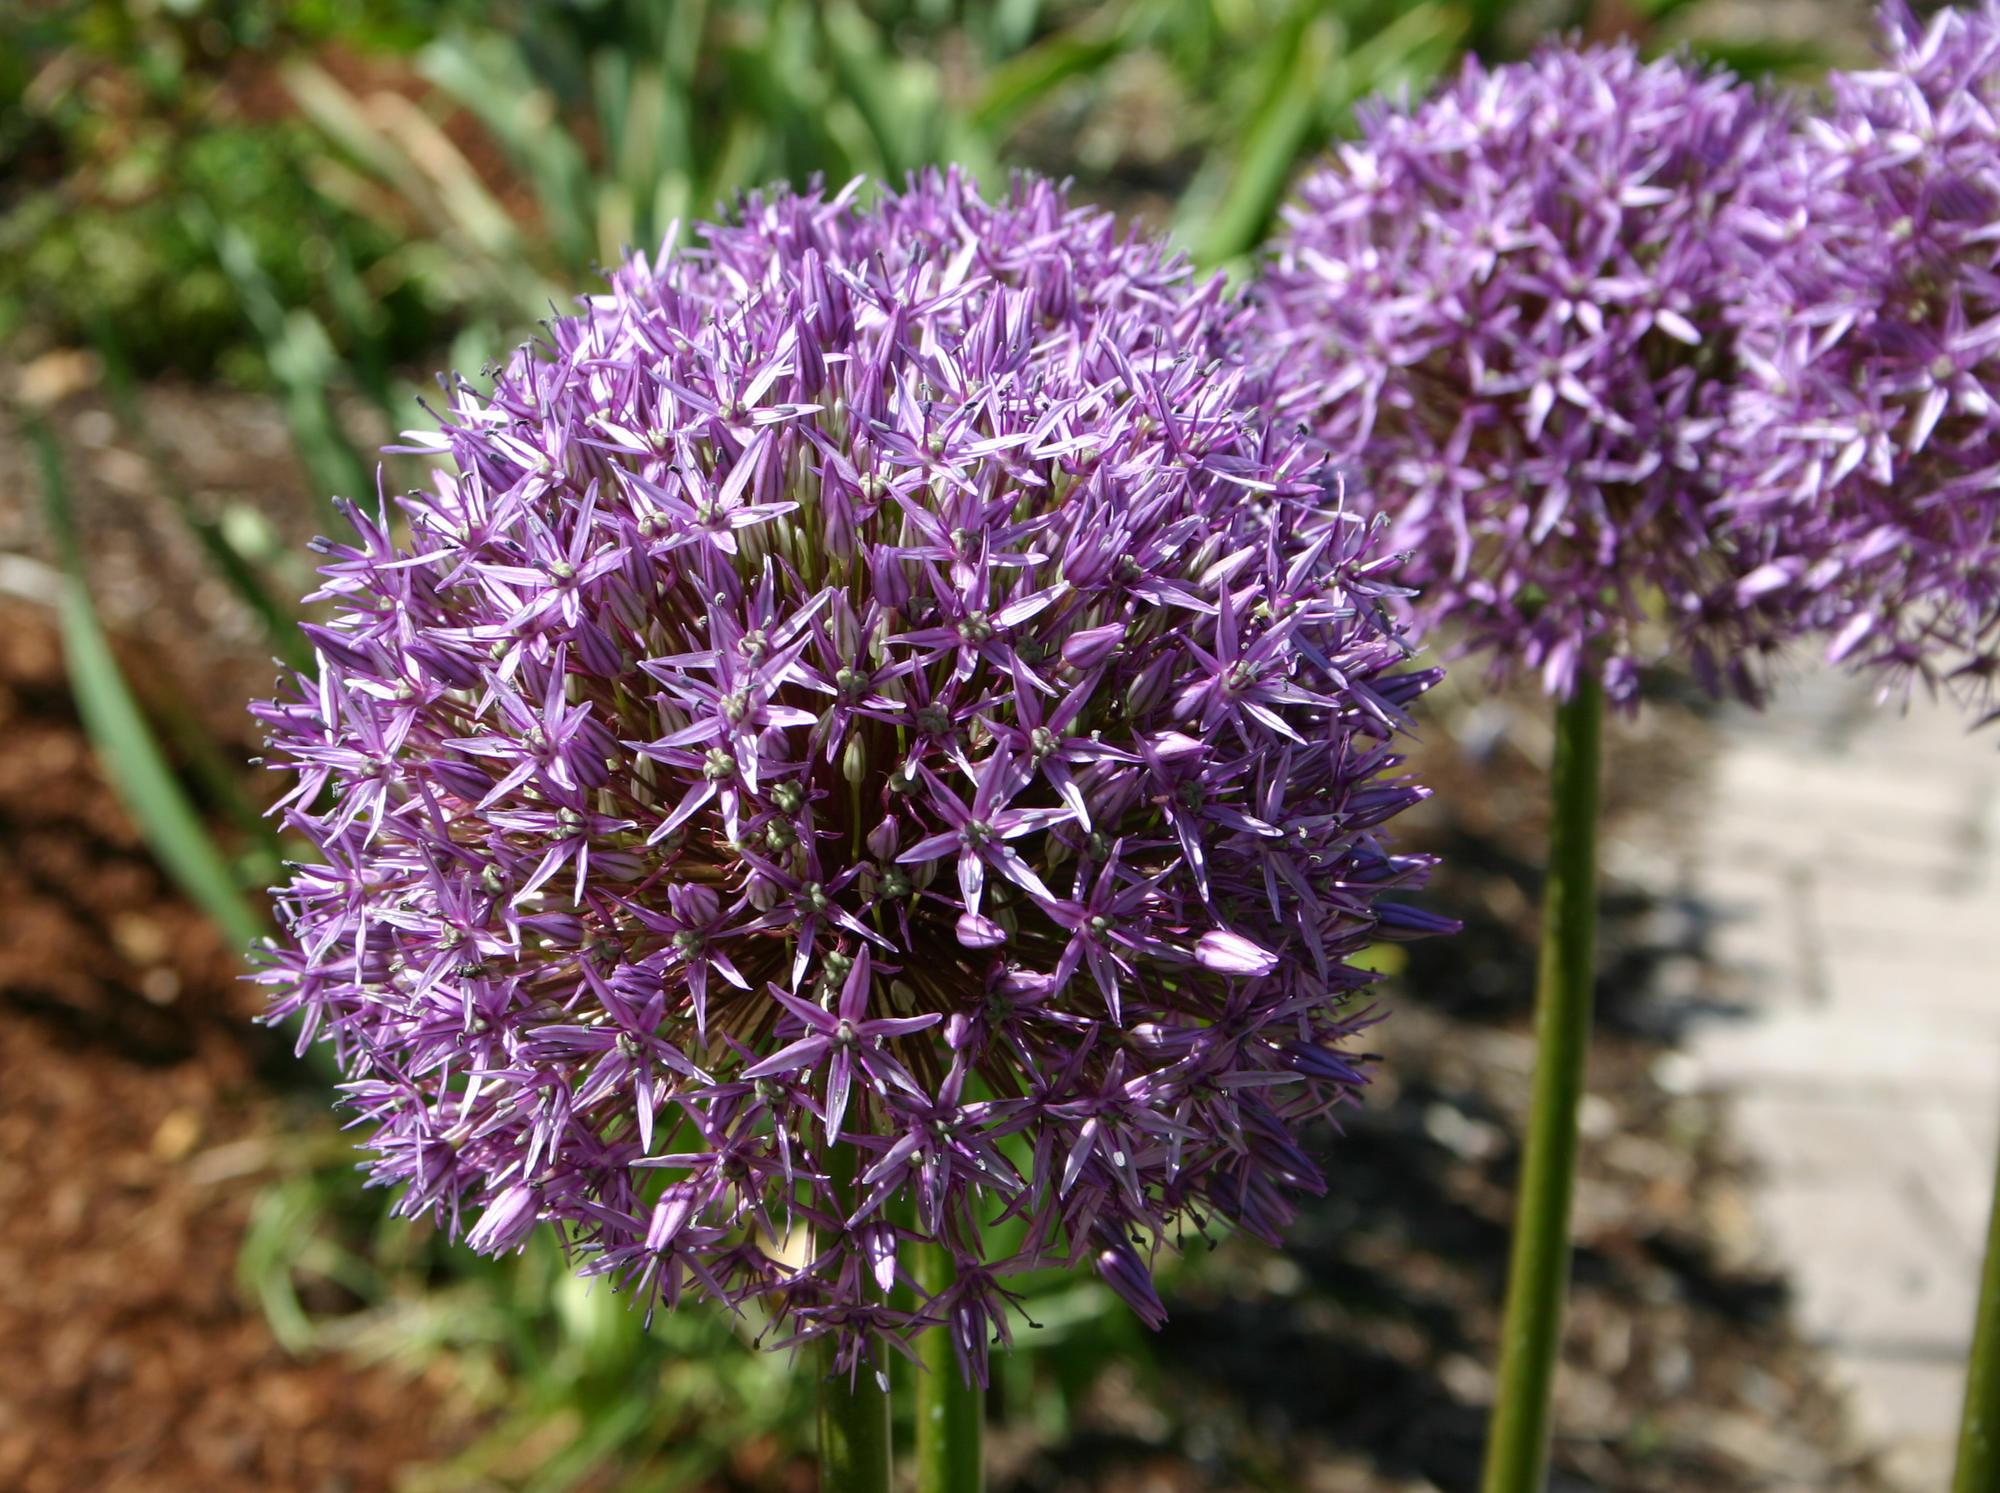 Globular purple allium flower.